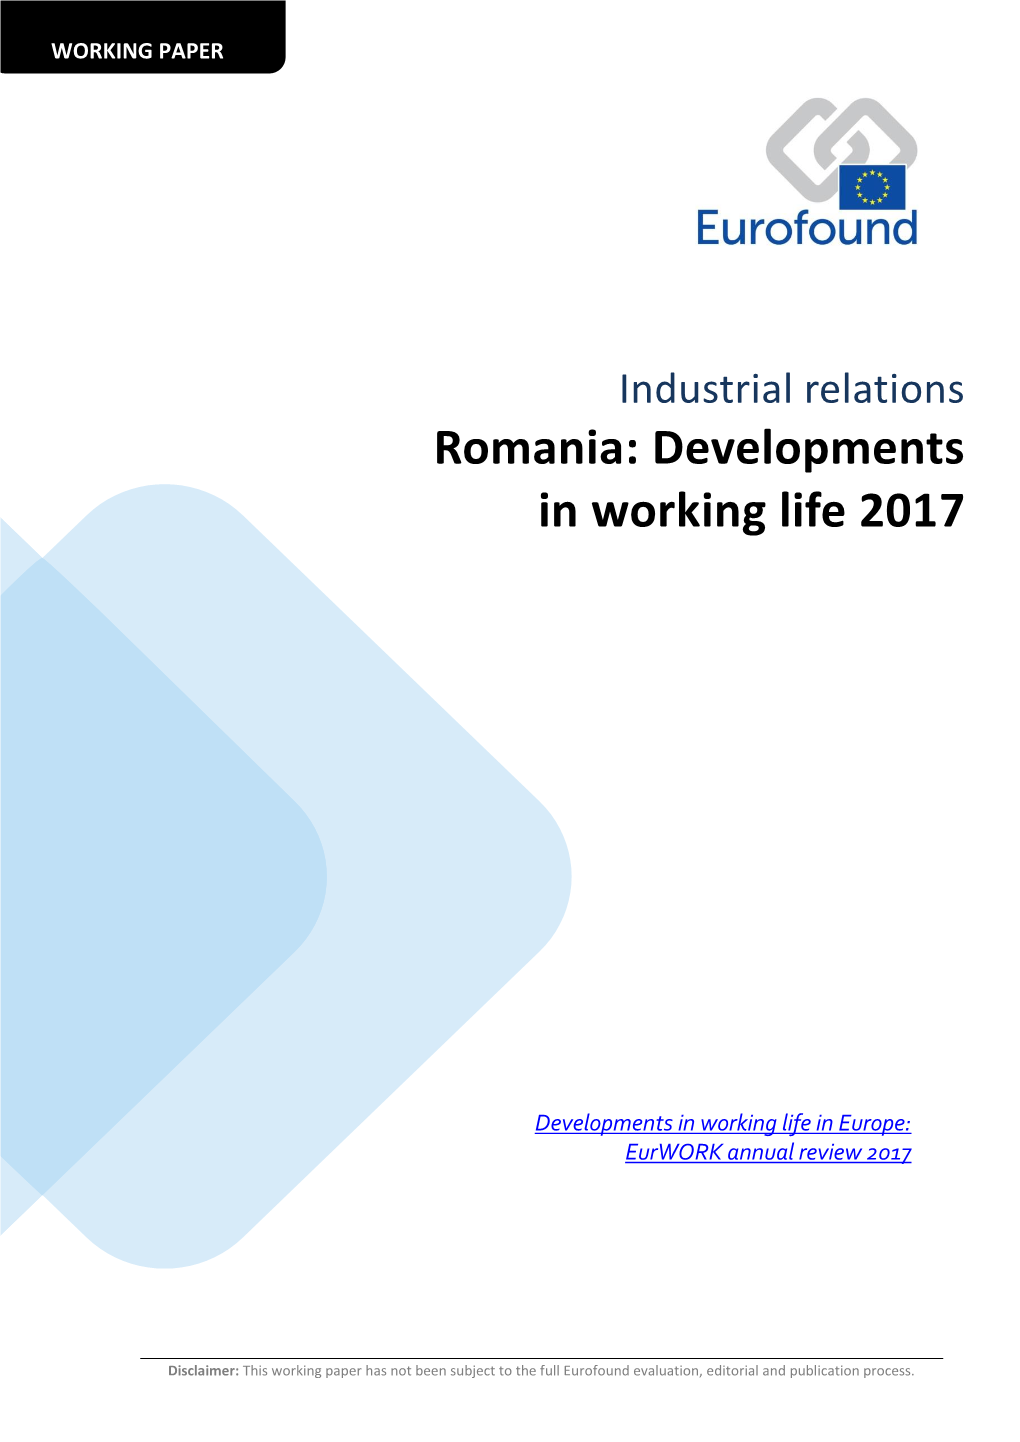 Romania: Developments in Working Life 2017